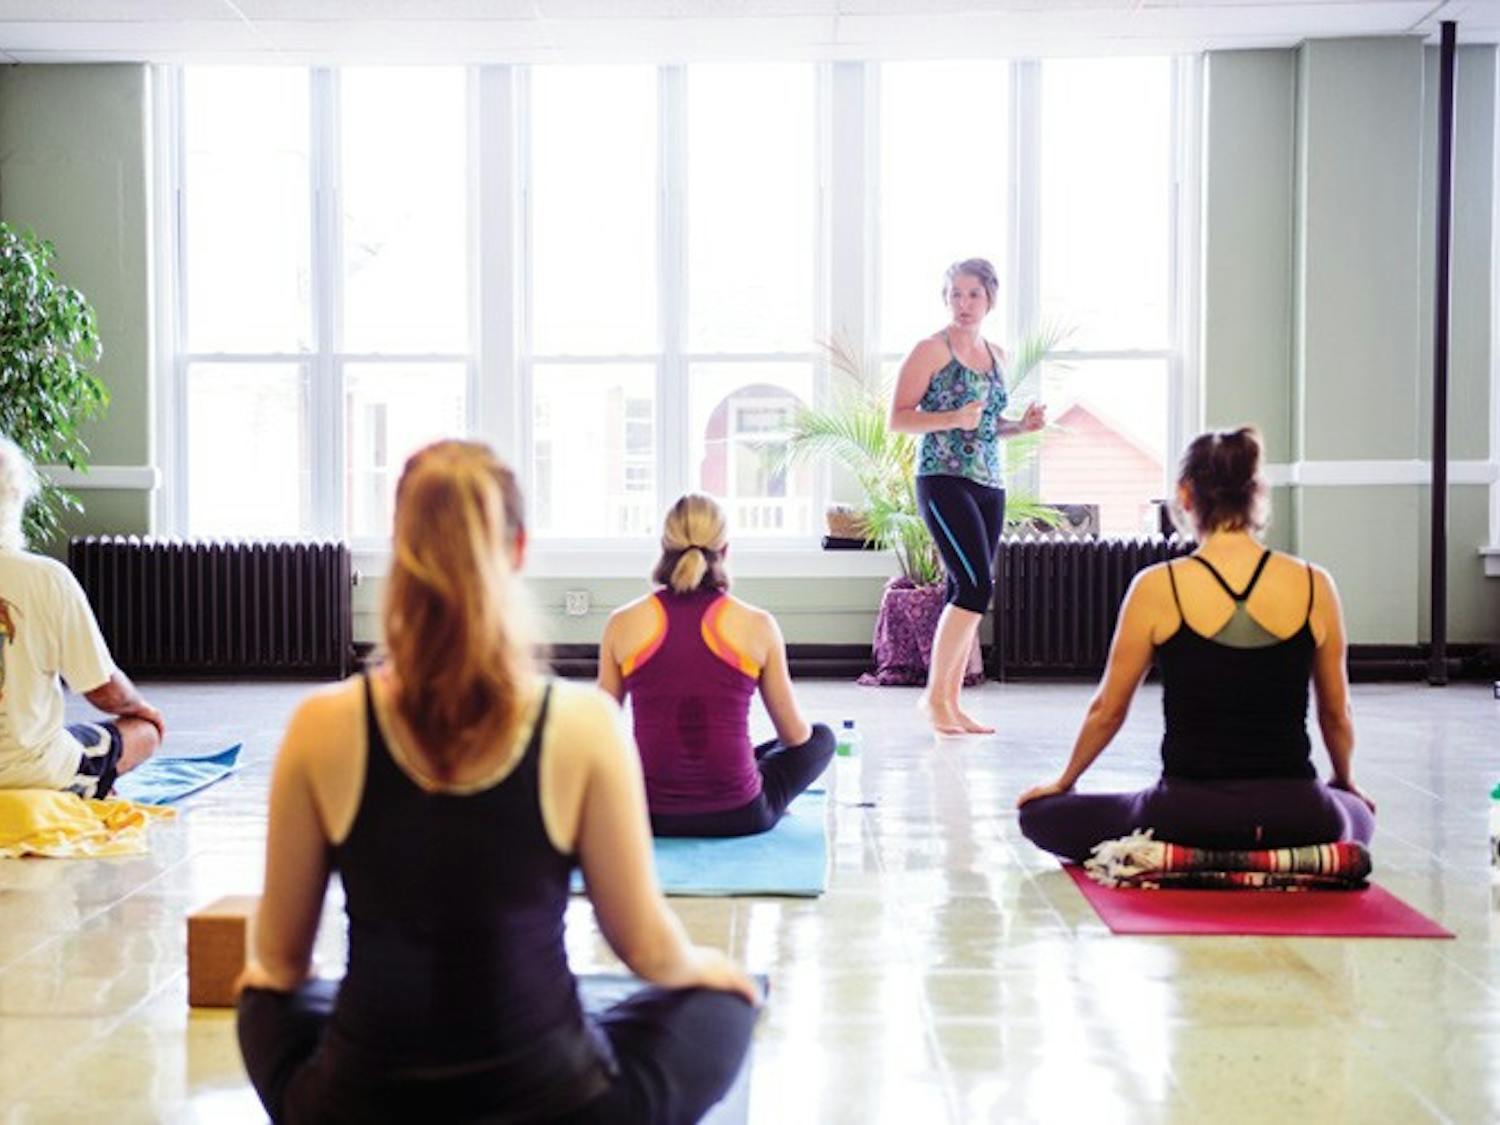 Yoga studio finally moves to 'dream location'  